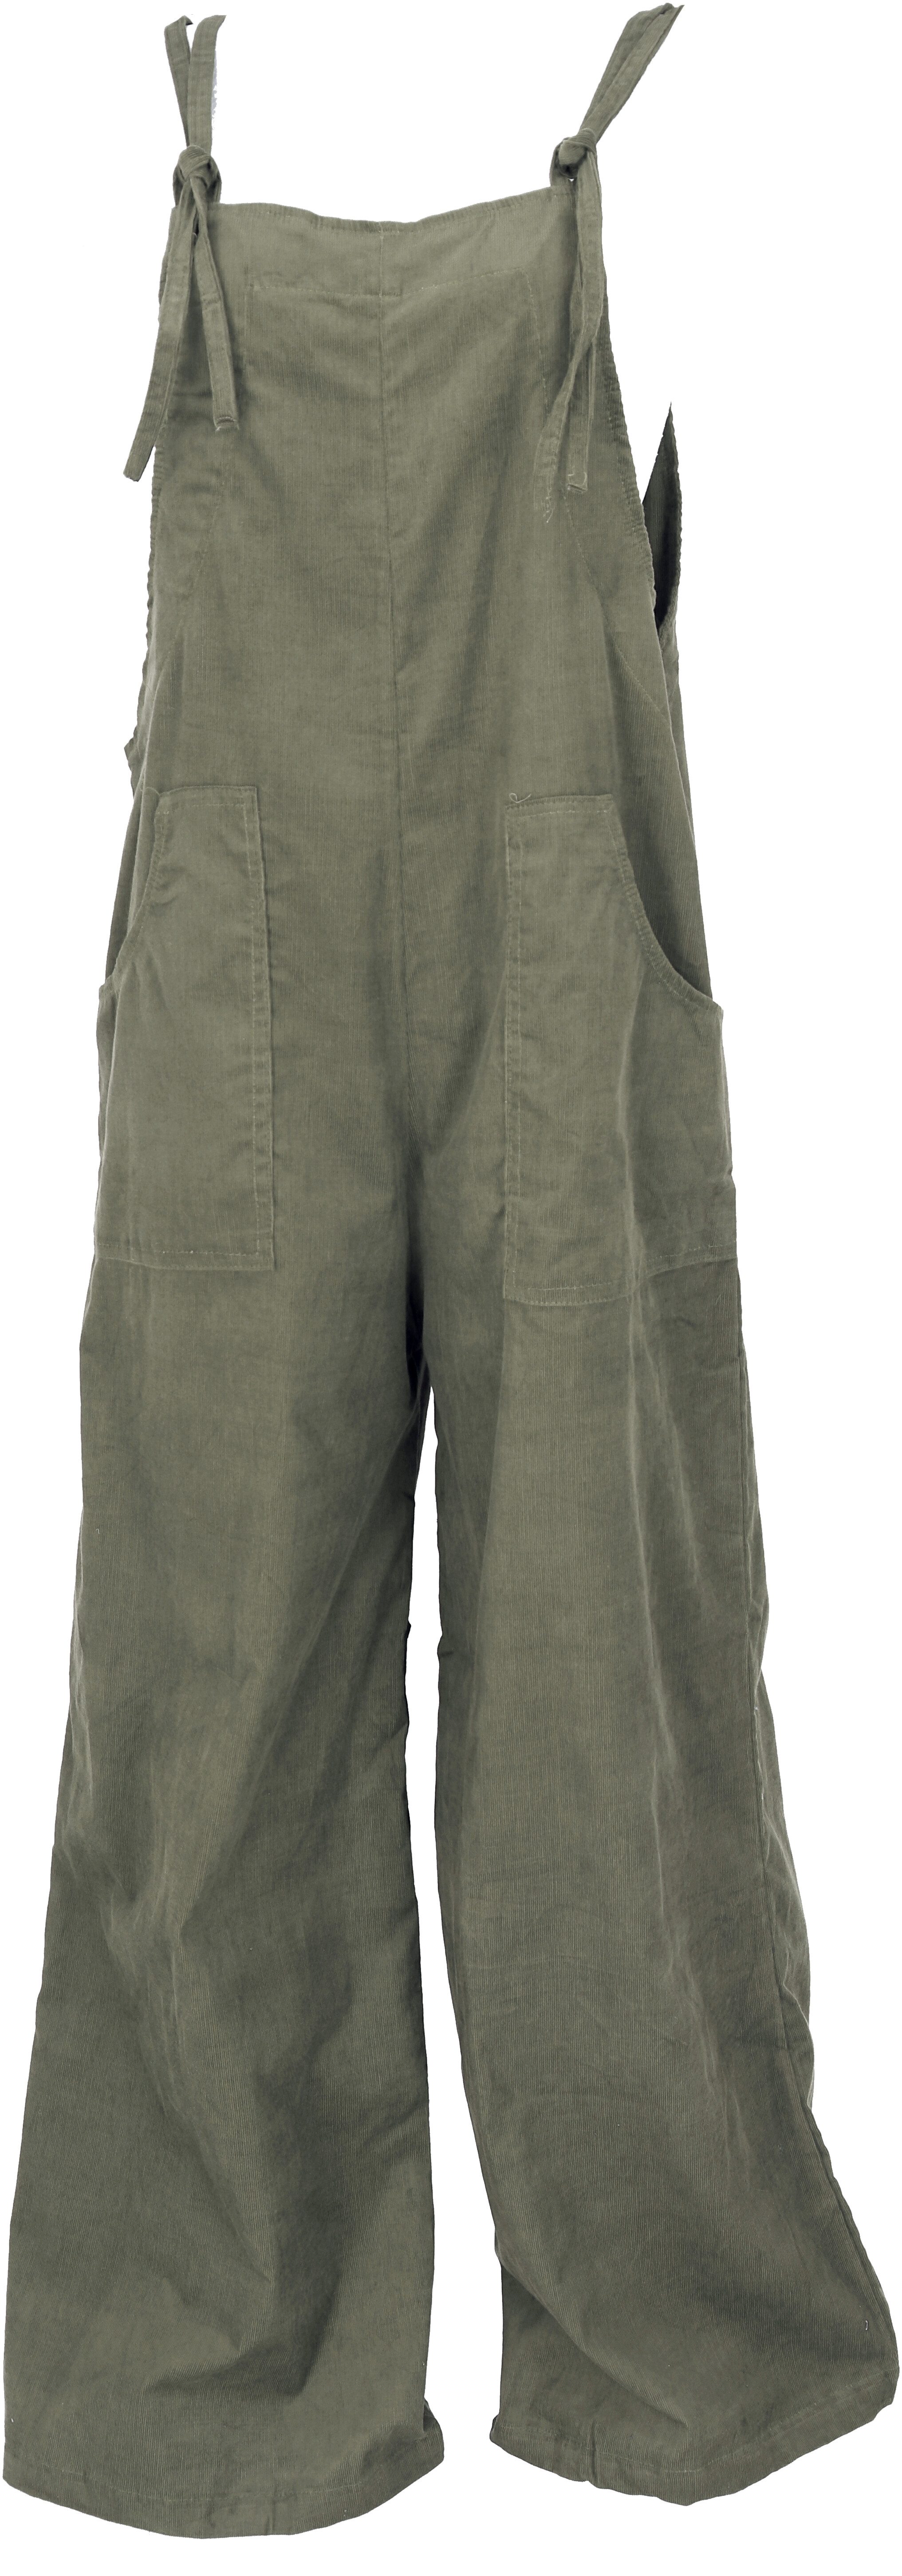 Guru-Shop Relaxhose Cord Boho Latzhose, weiter Jumpsuit, plus size.. Ethno Style, alternative Bekleidung